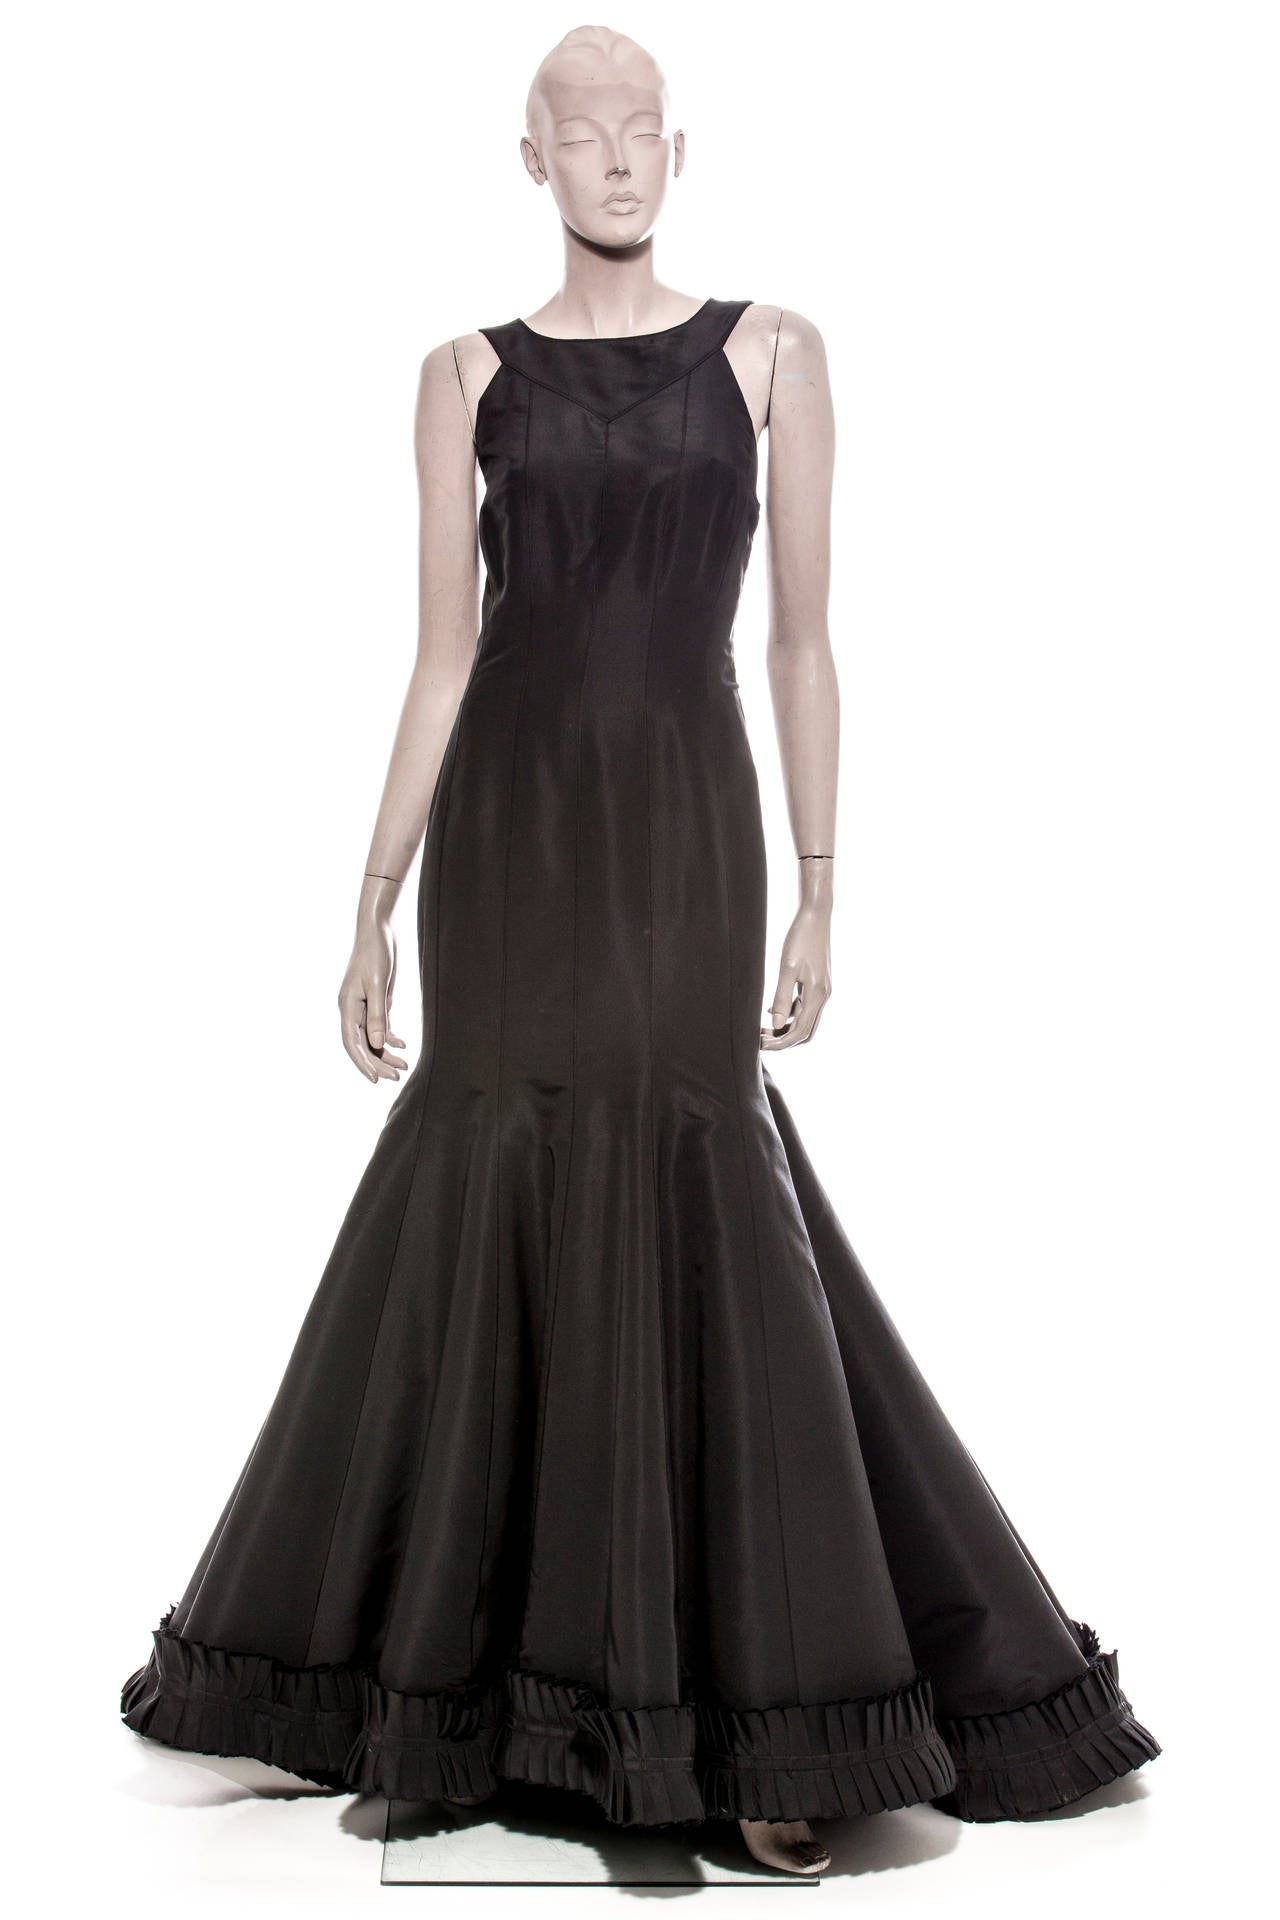 Oscar de la Renta, Spring - Summer 2007 sleeveless black silk faille evening dress, back zip and fully lined.

US. 12